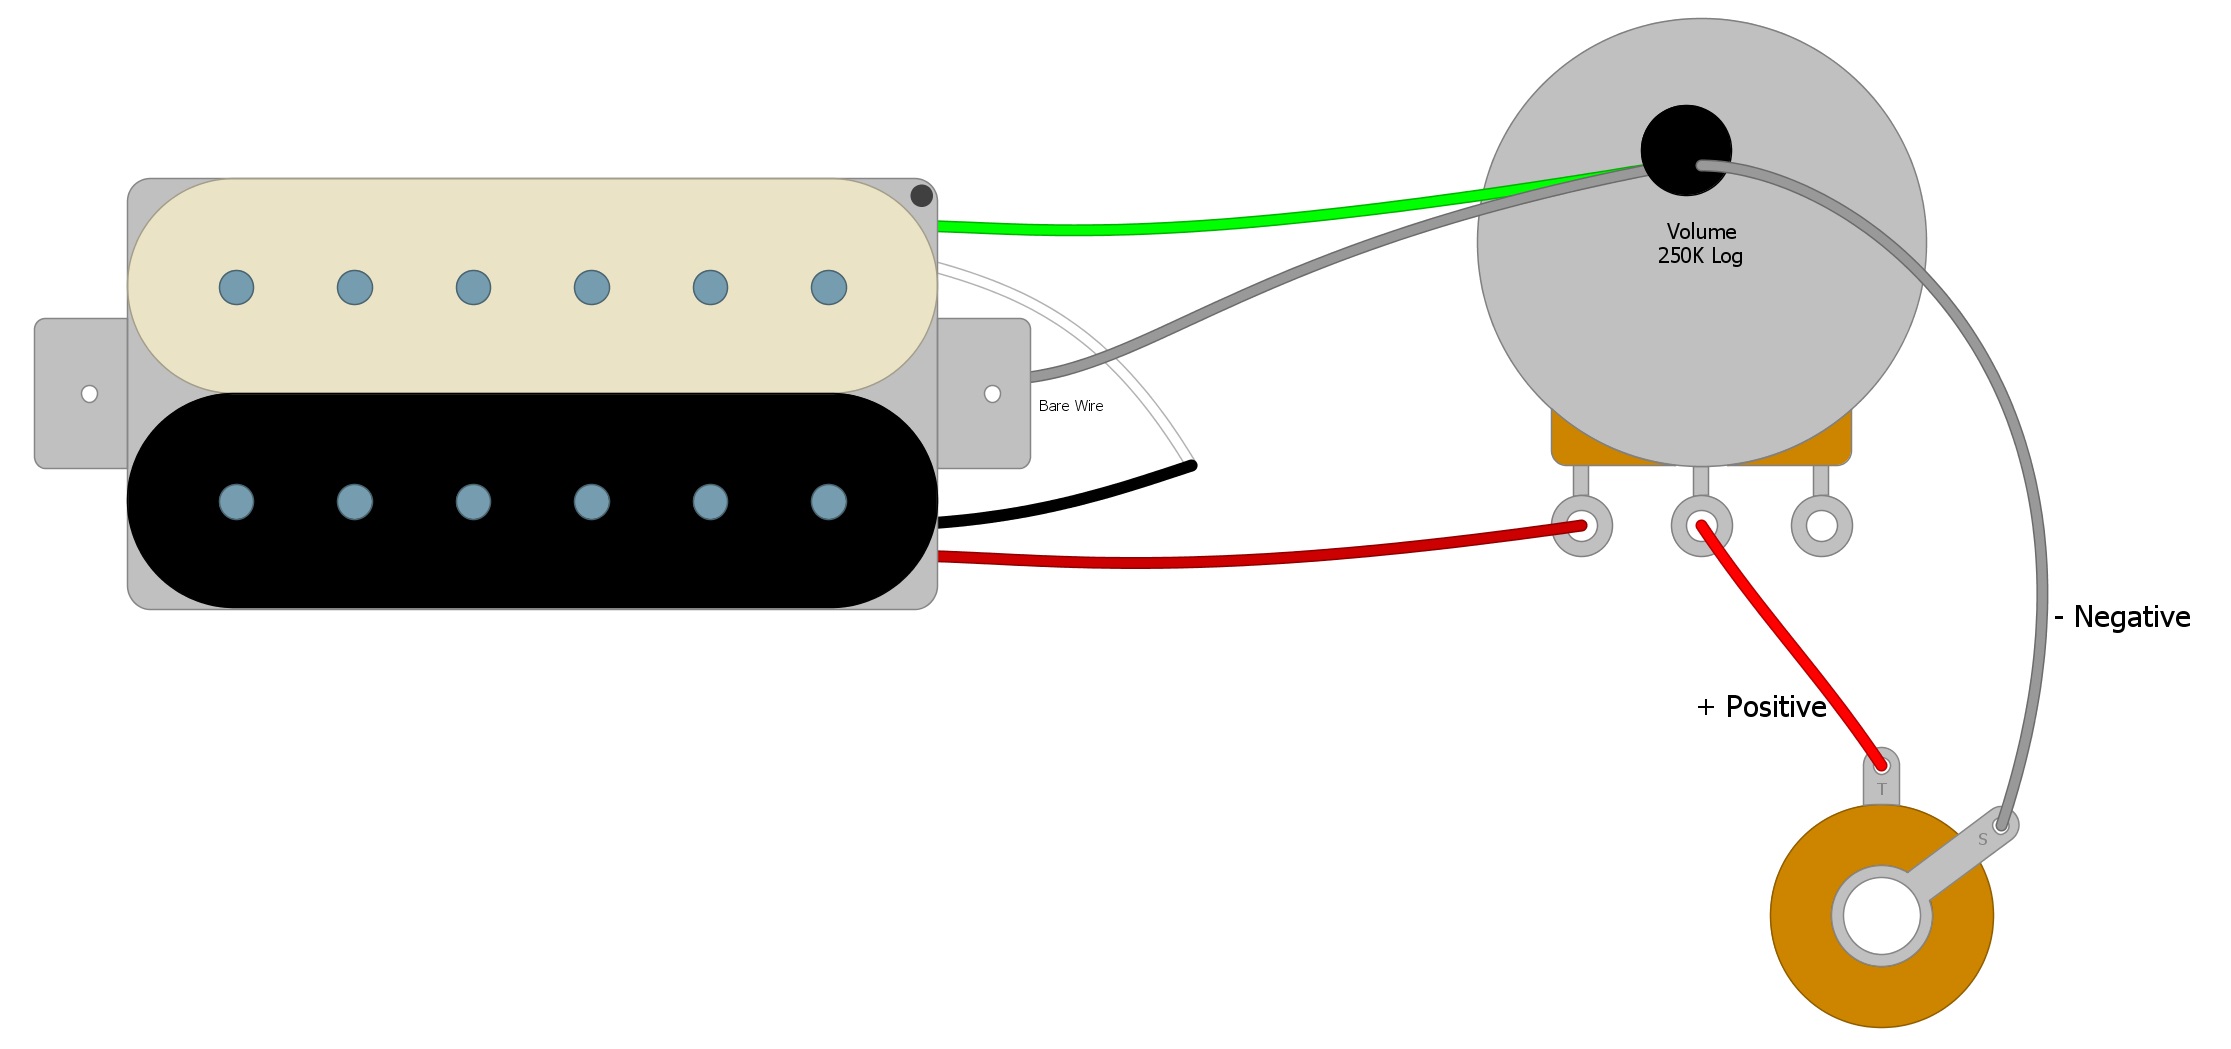 Dimarzio Titan Wiring Diagram, Guitar Pickup Wiring Diagrams Dimarzio